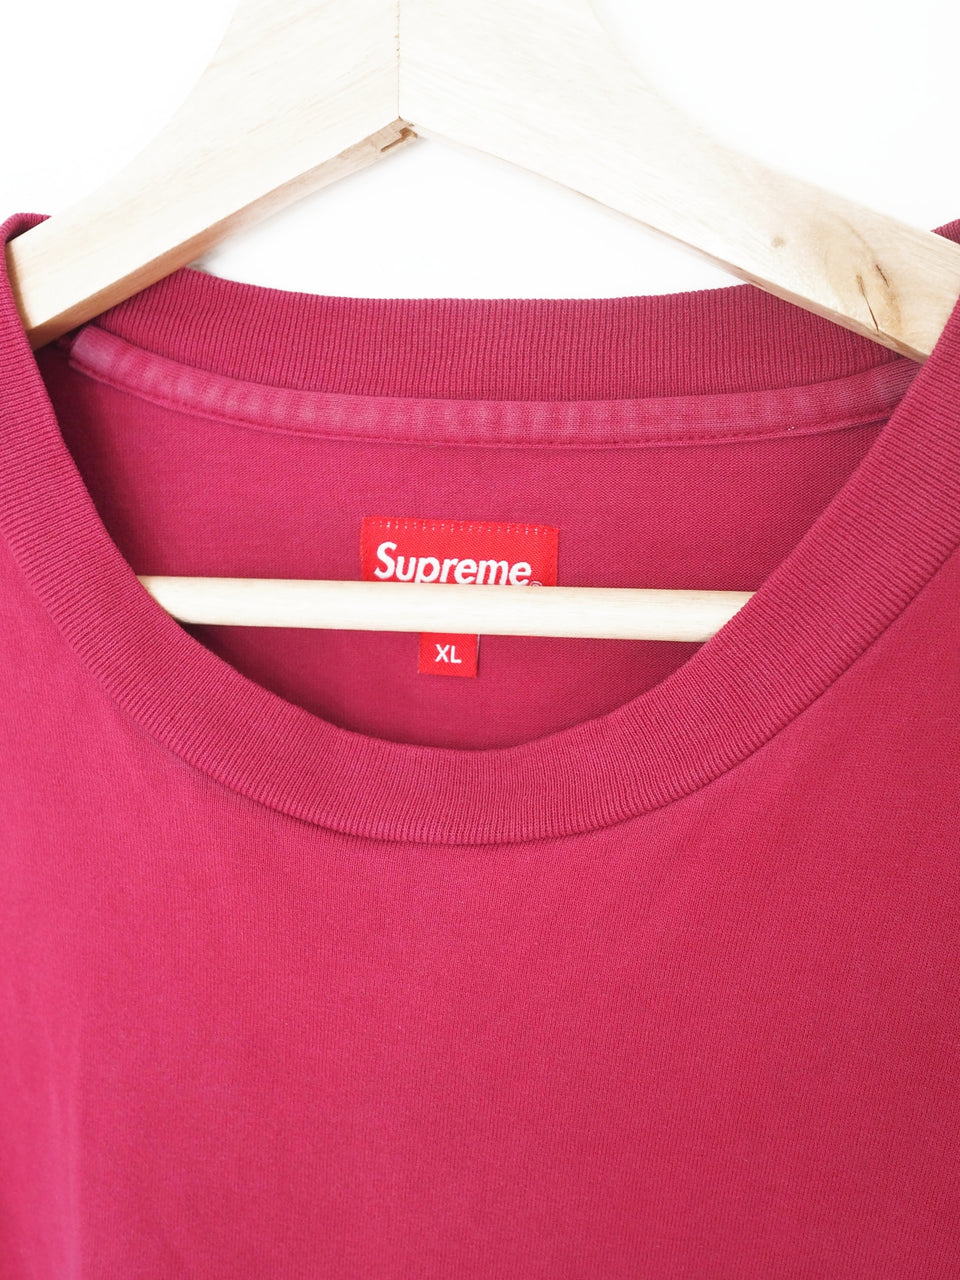 supreme red long sleeve shirt